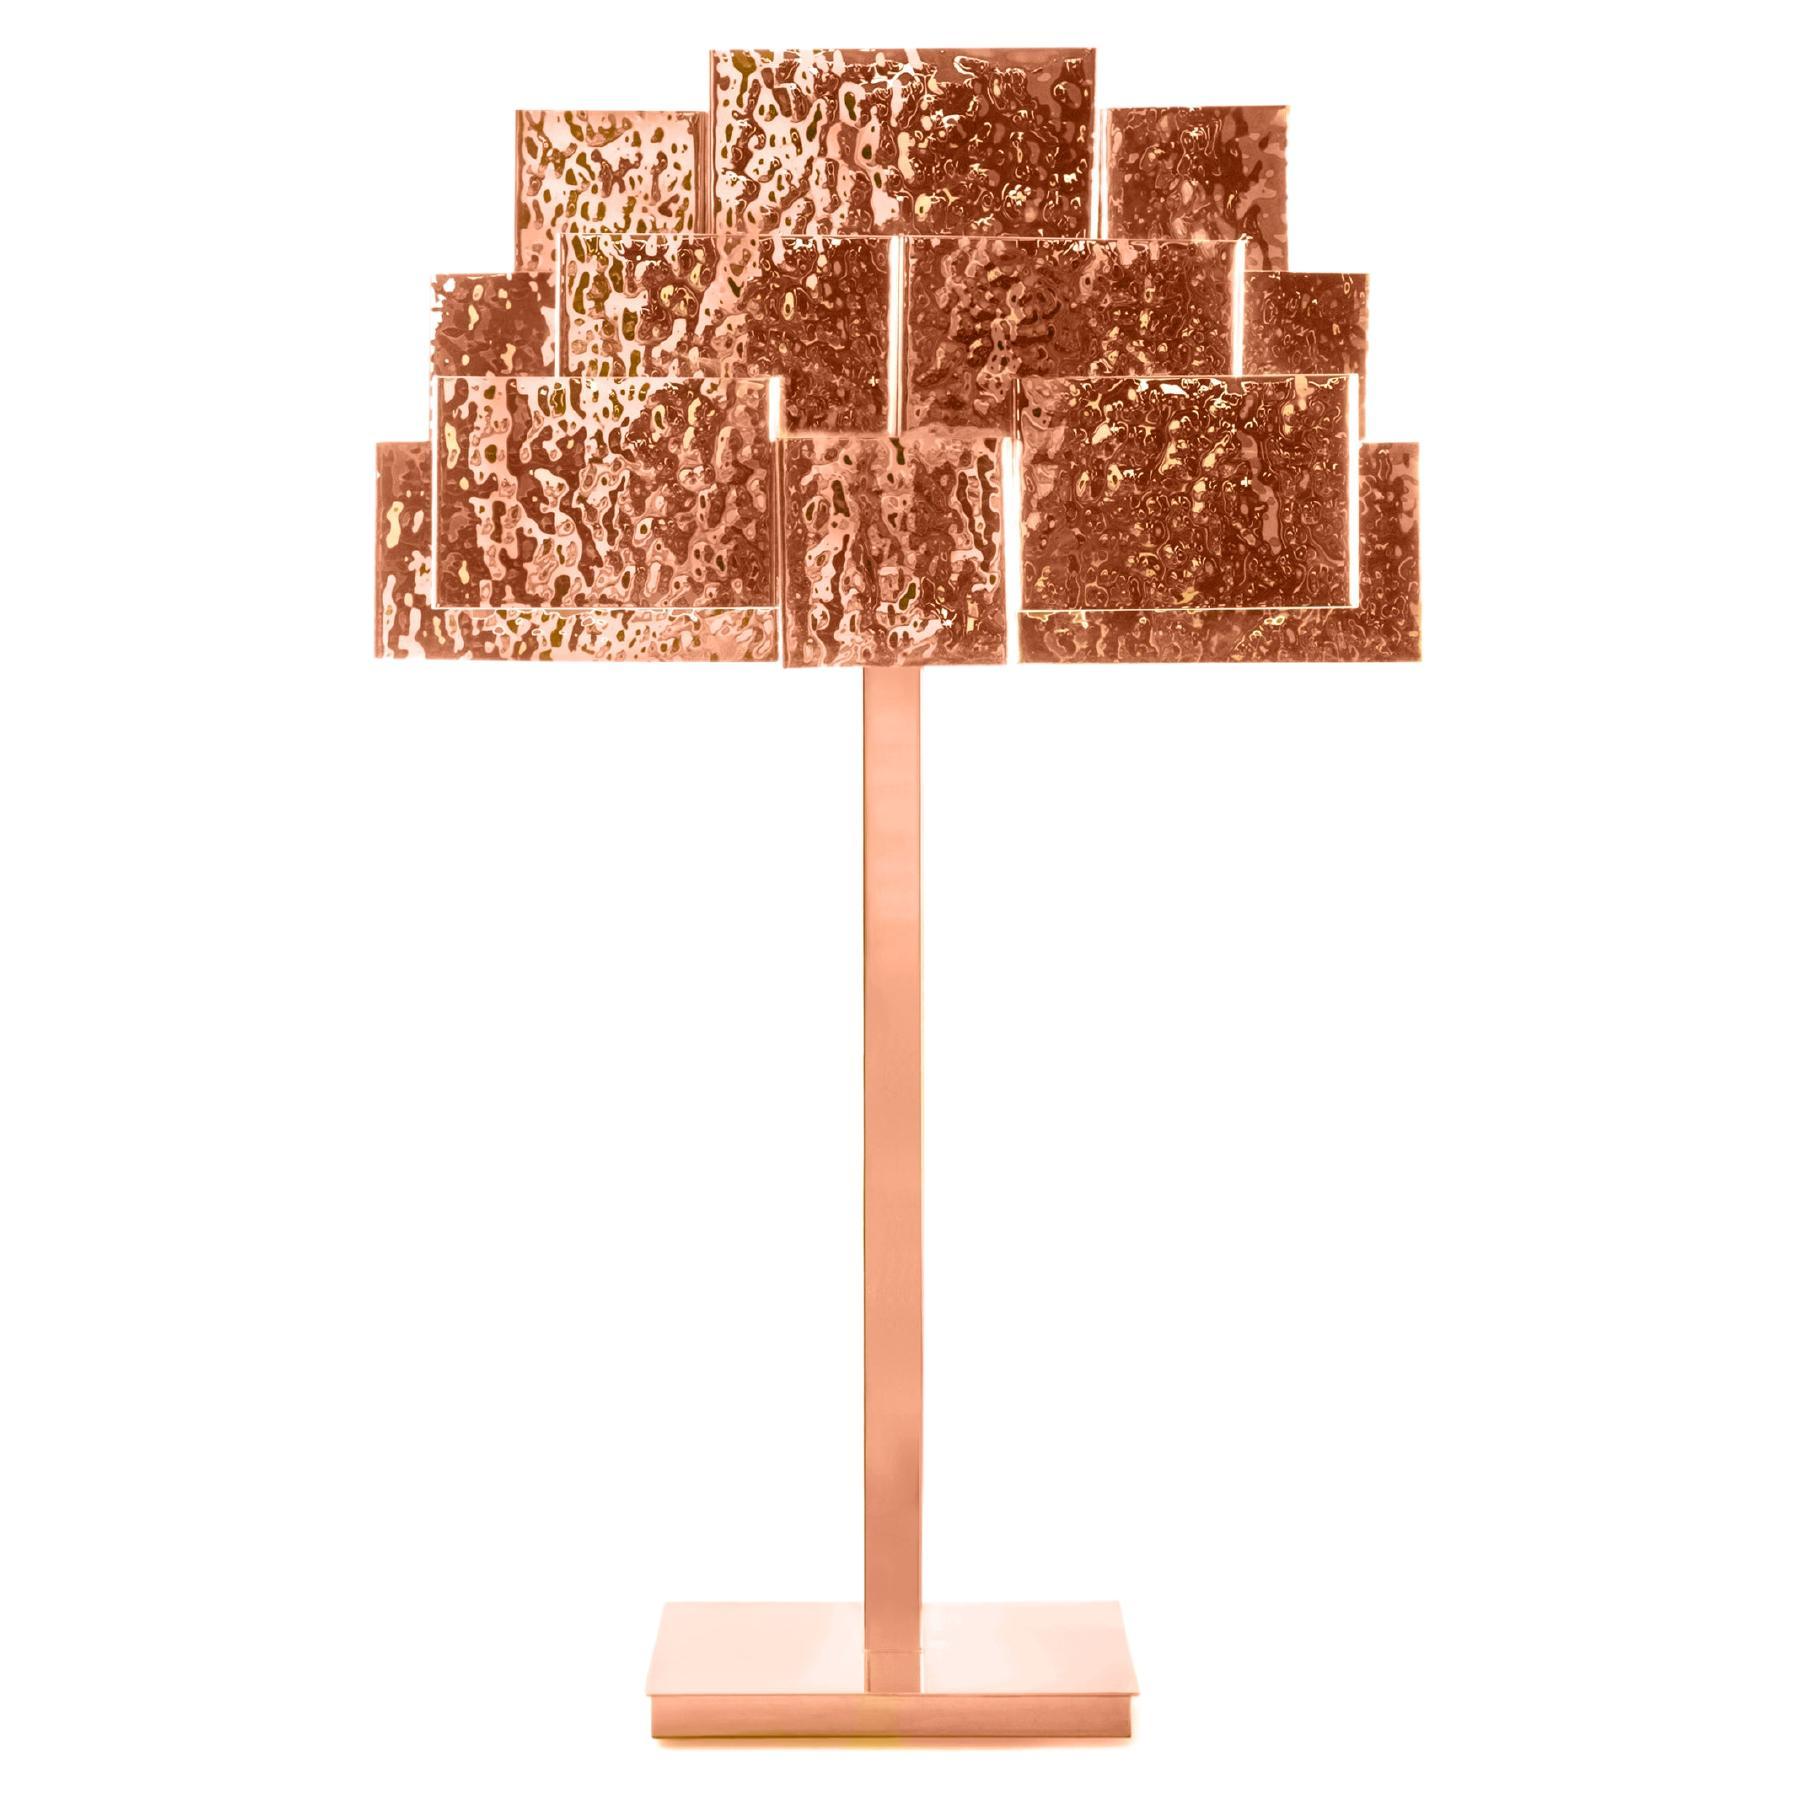 Inspiring Trees Table Lamp Hammered Copper, InsidherLand by Joana Santos Barbosa